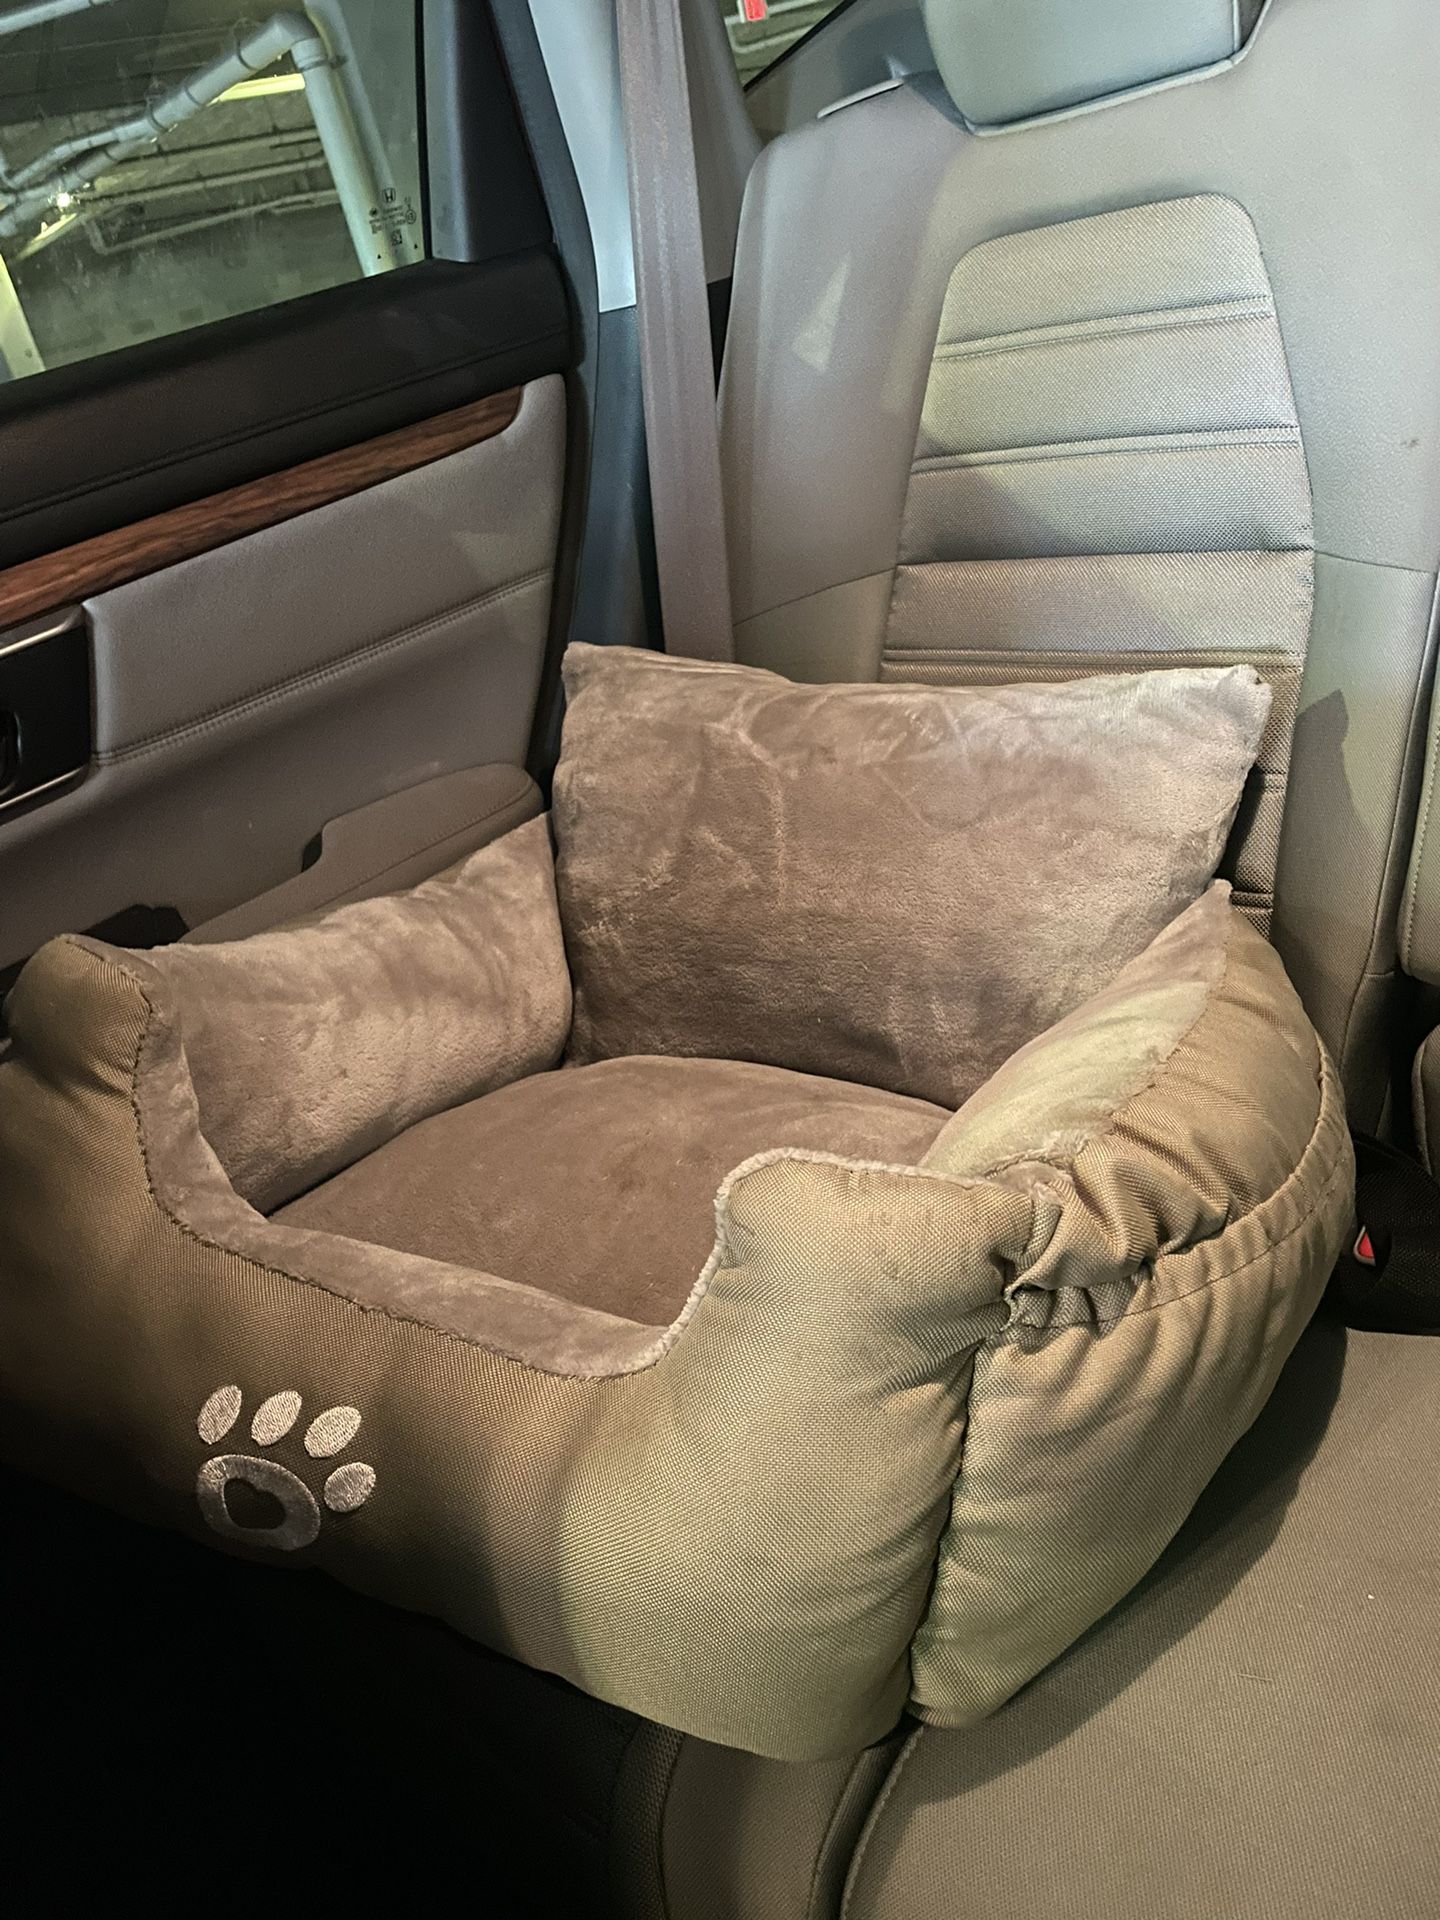 Small Dog Car Seat